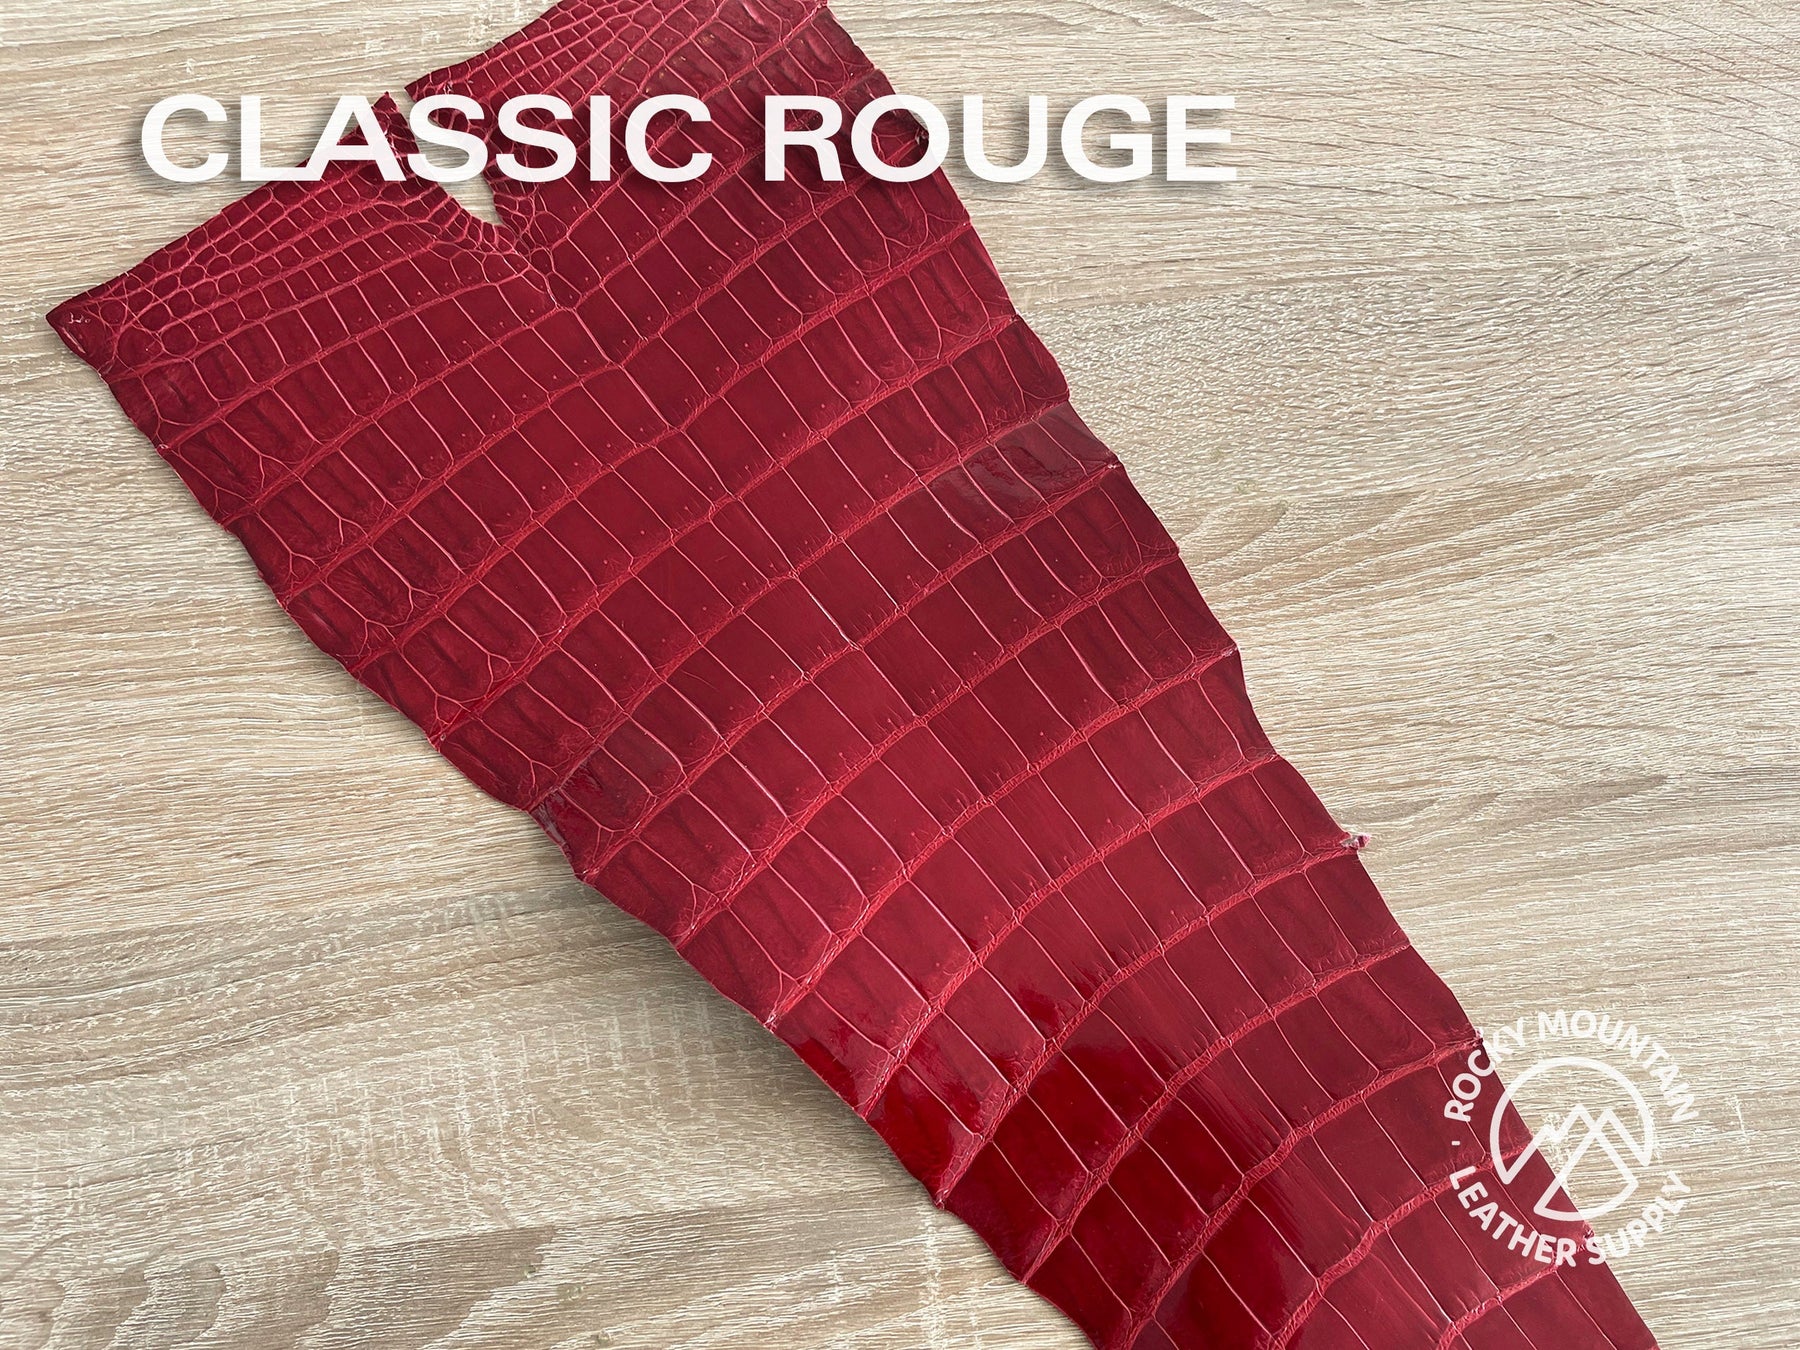 Porosus Crocodile Tails - Farm Raised (Top Quality) - Luxury Skins (Glazed Red/Oranges)